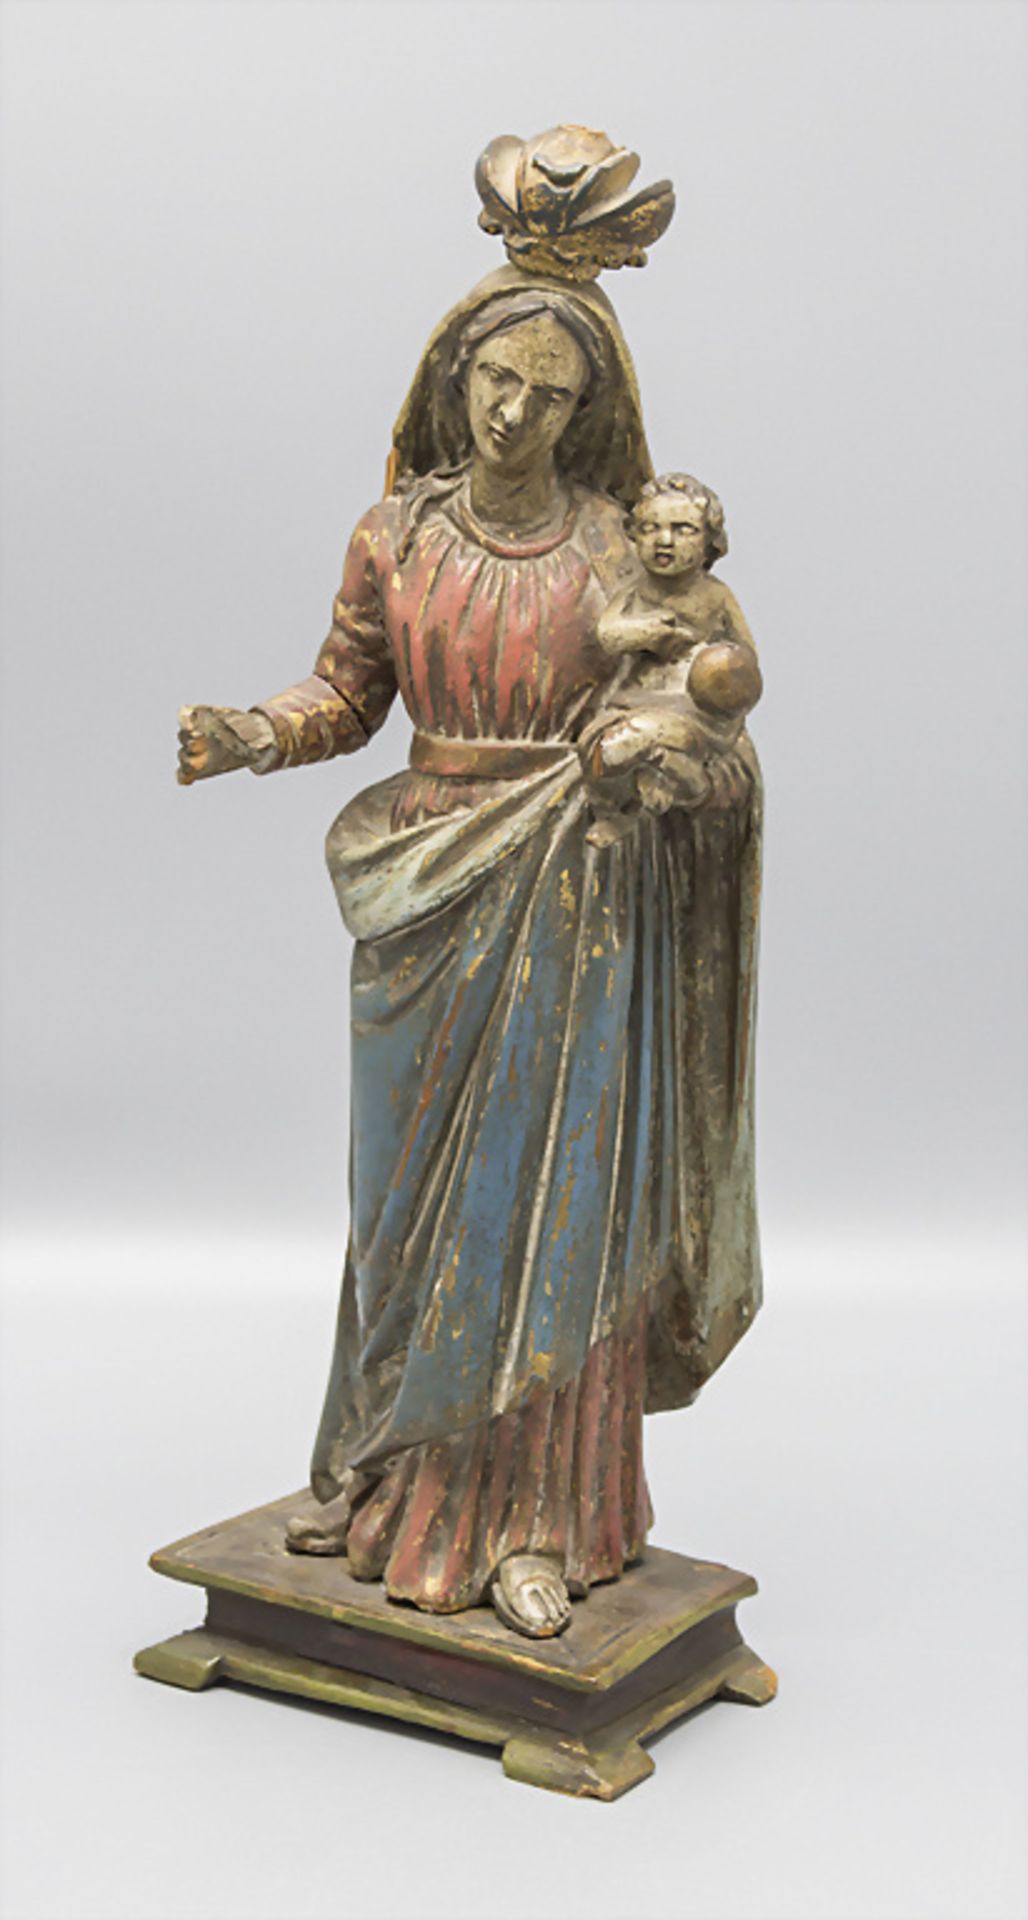 Holzskulptur einer Madonna mit Kind / A wooden sculpture of mother Mary with child, 18. Jh.